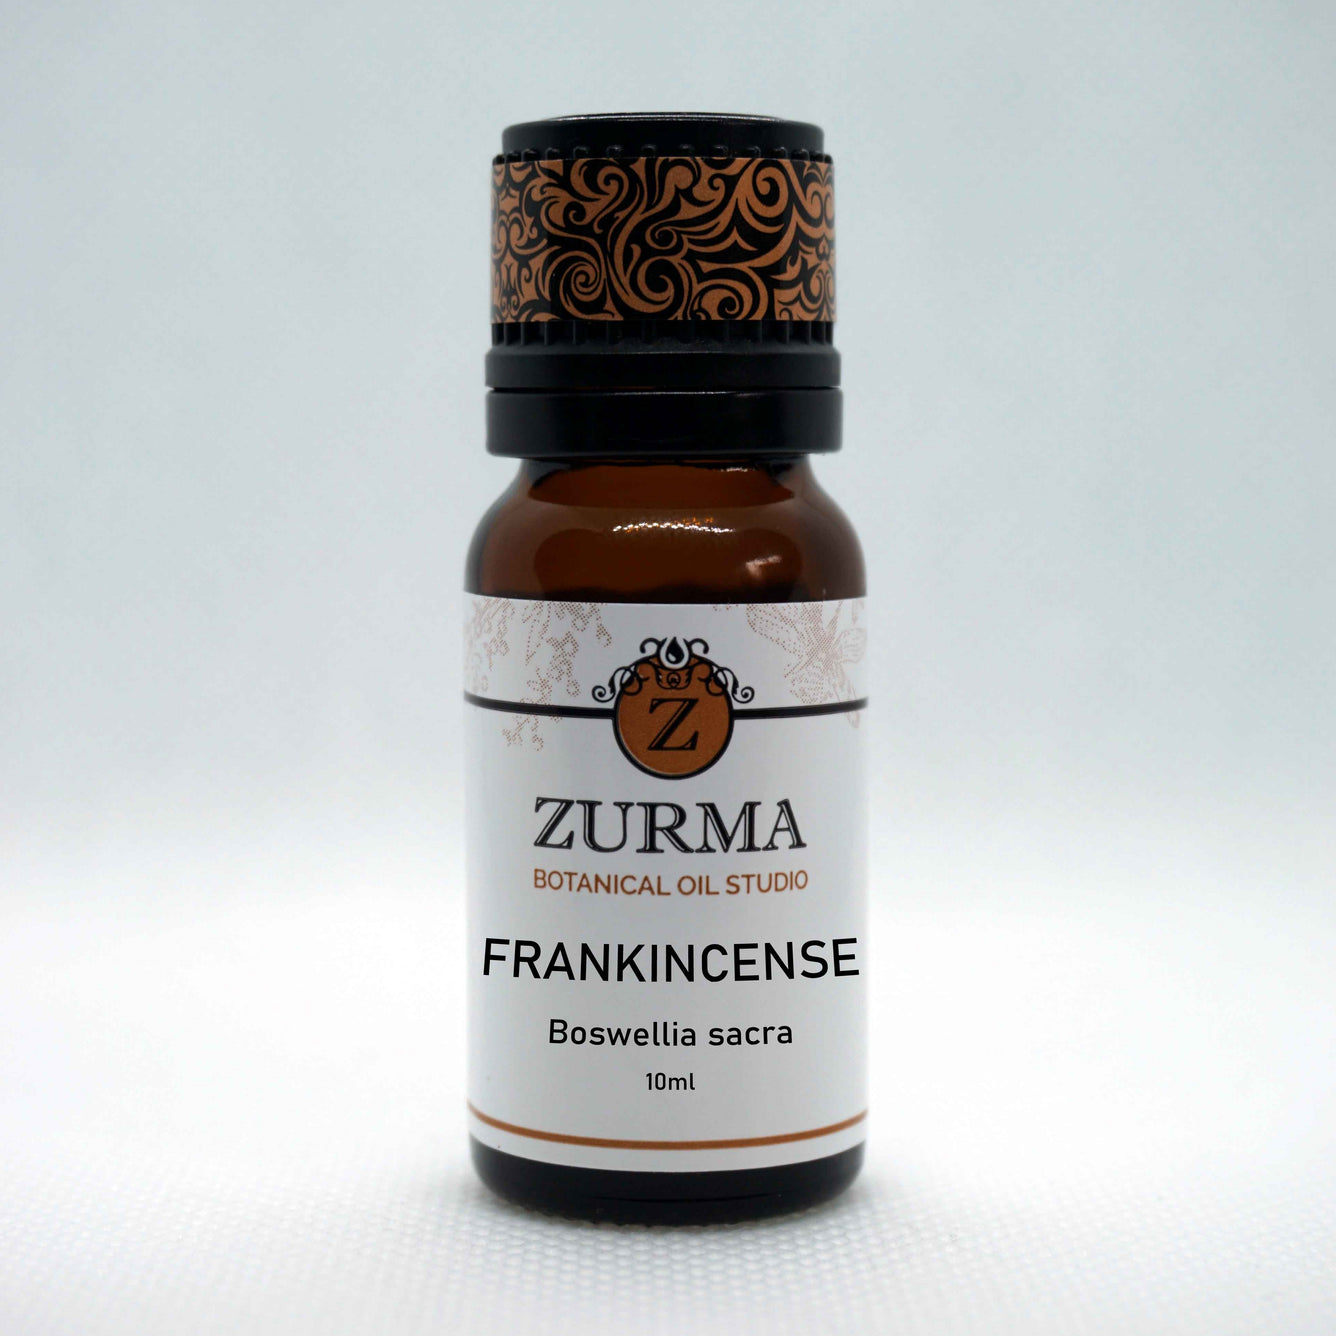 Frankincense Sacra Essential Oil